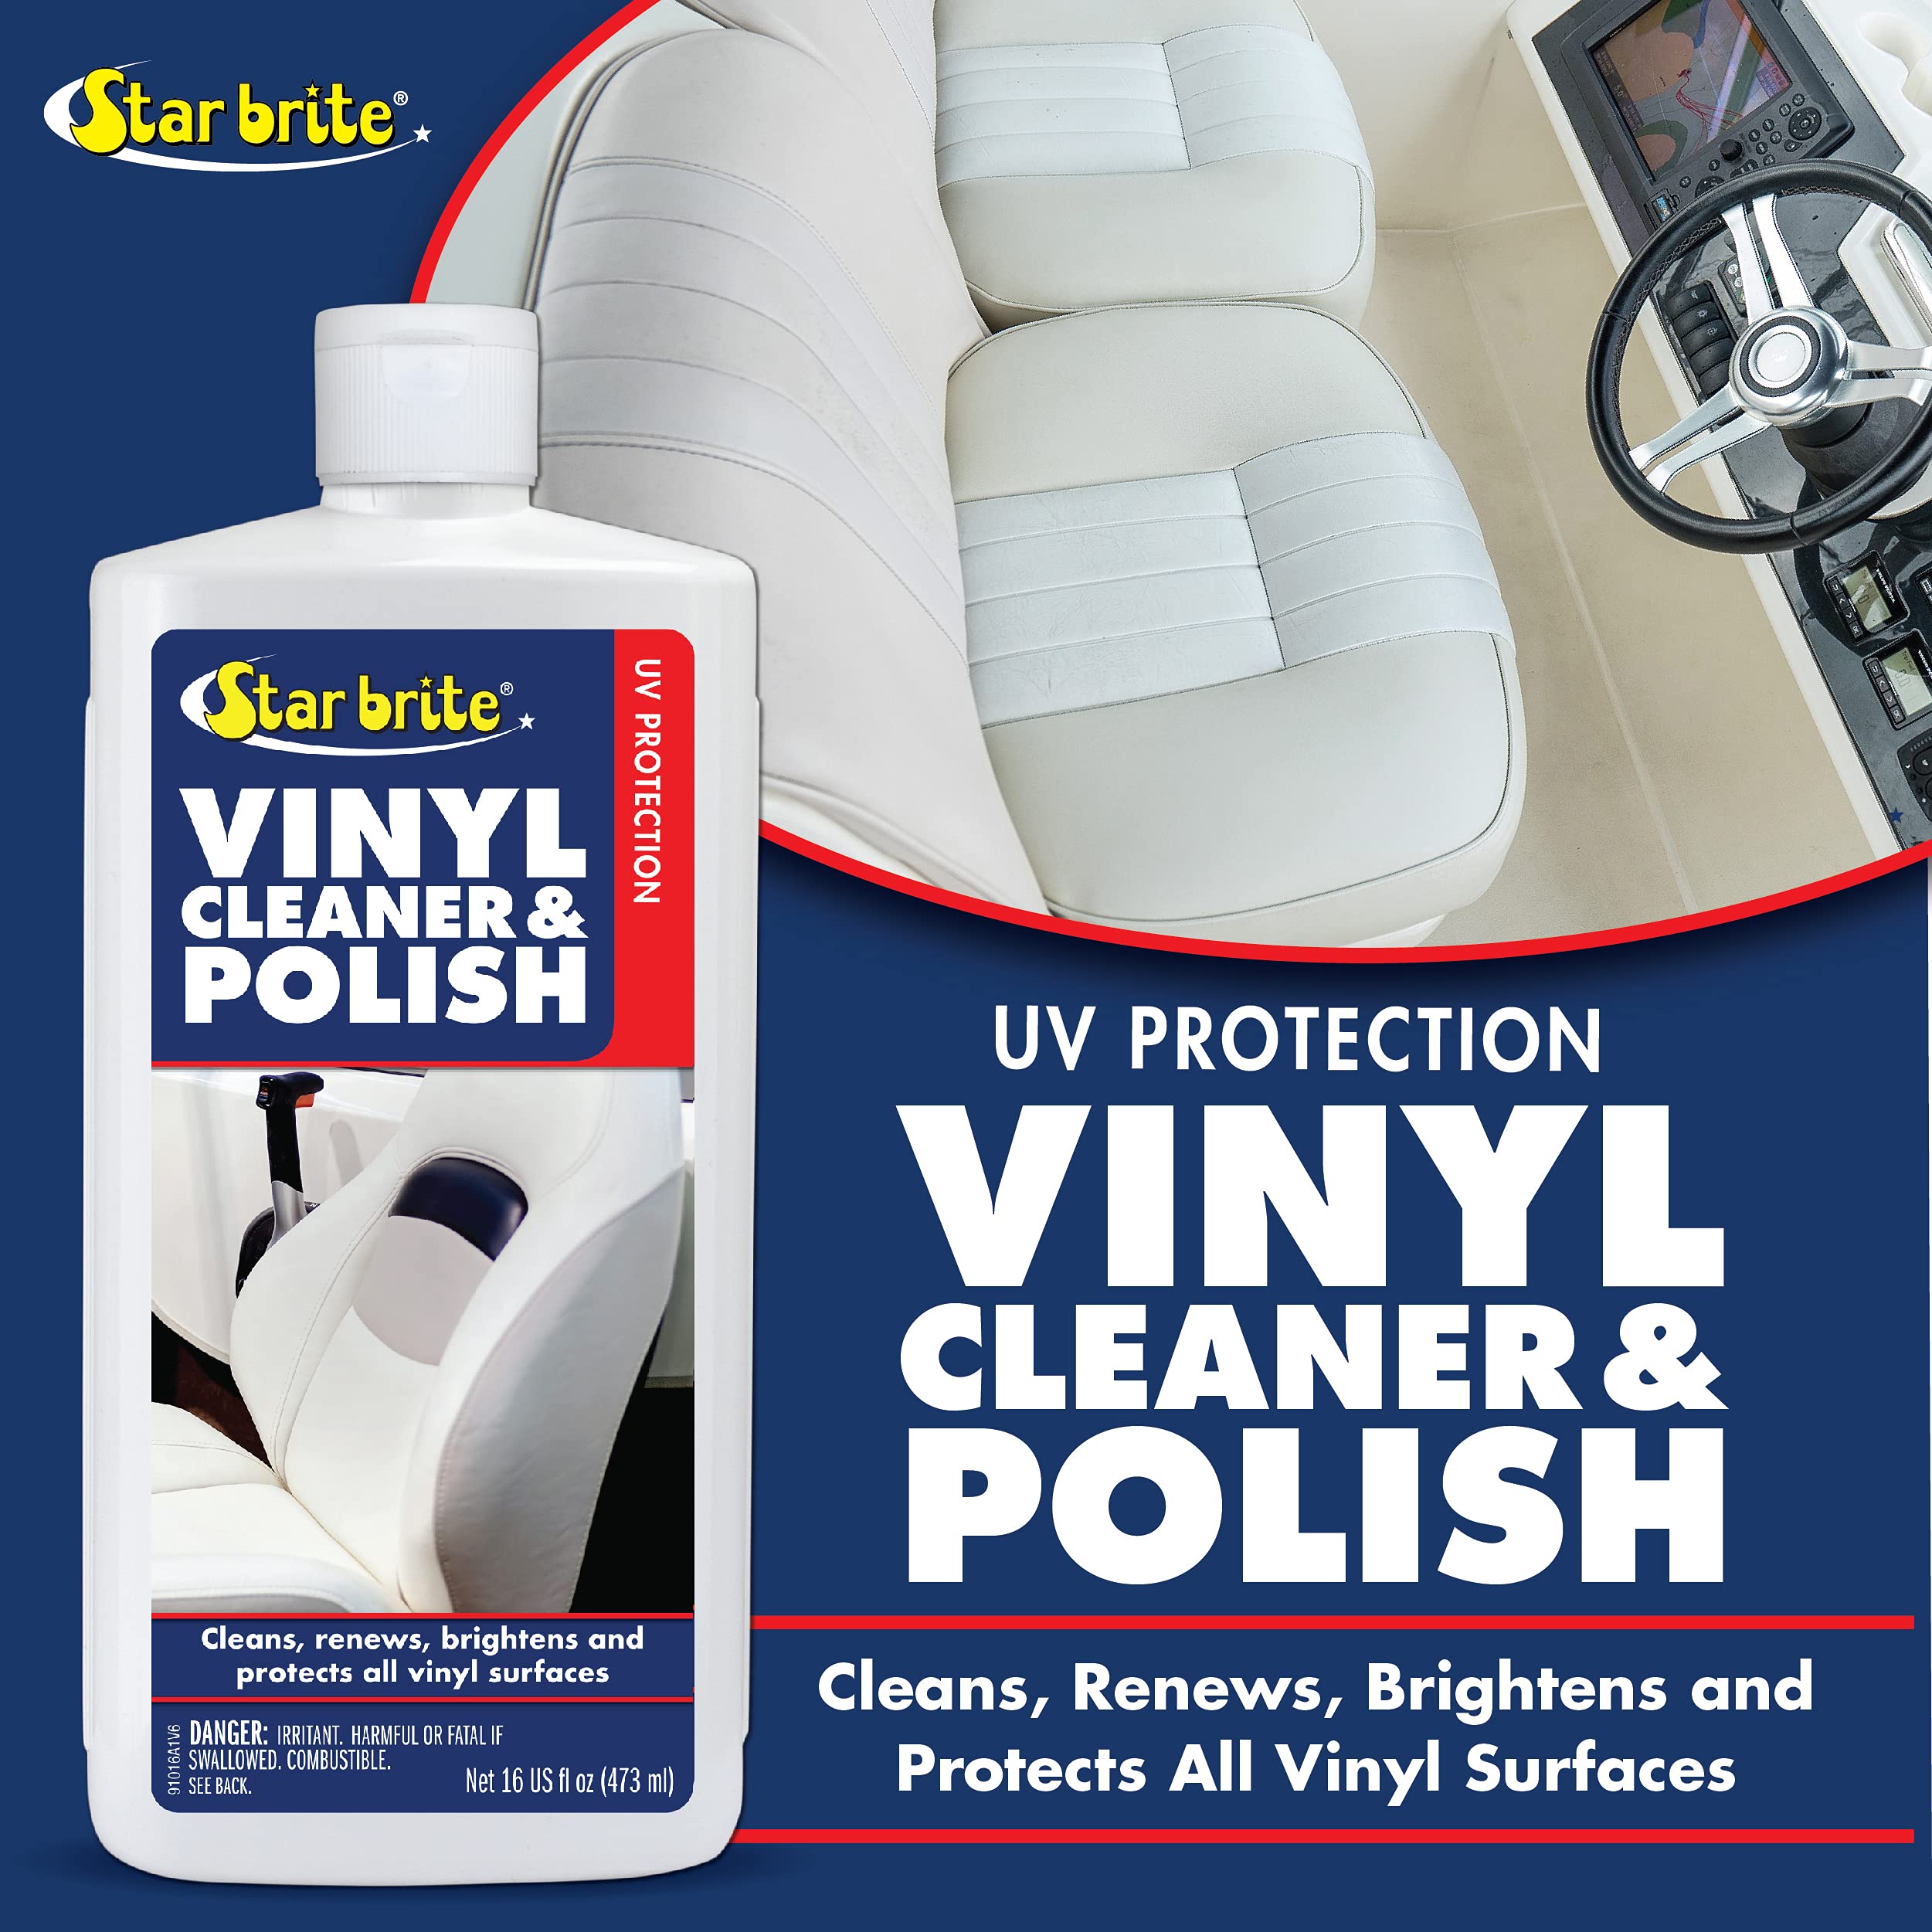 Star brite Vinyl Cleaner, Polish & Protectant